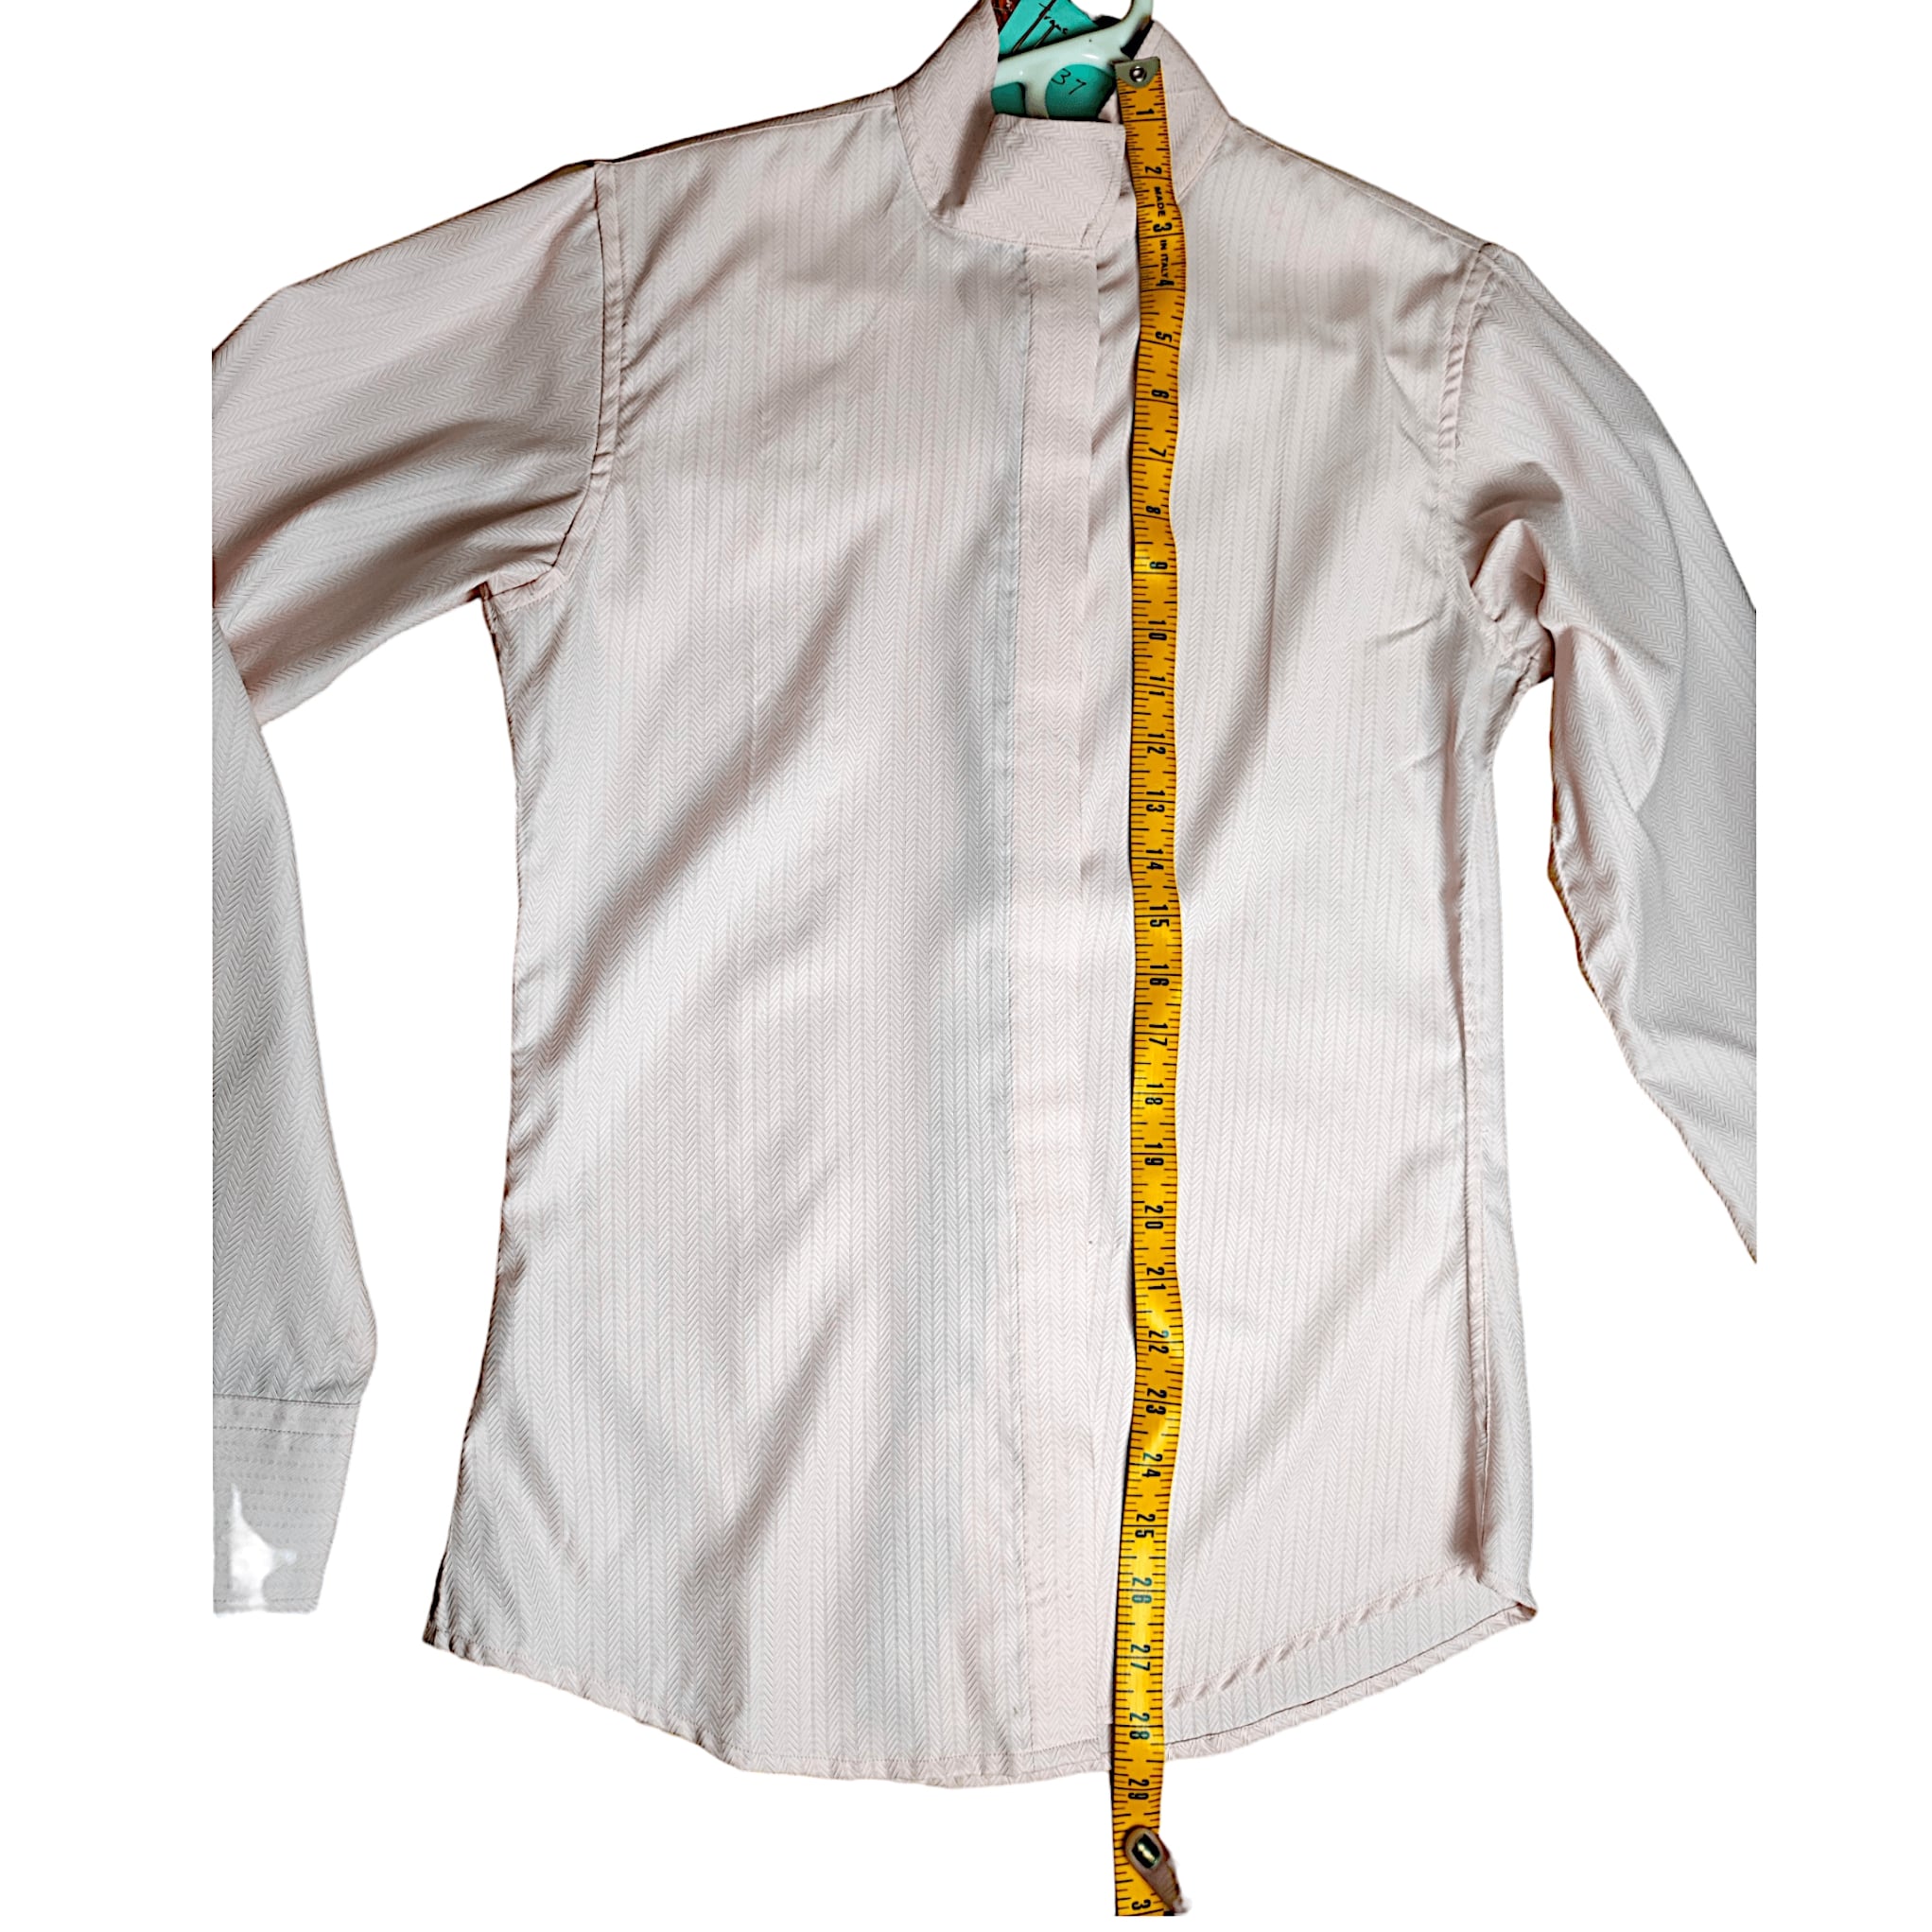 KHS EXCHANGE RHC Equestrian Long Sleeve Show Shirt